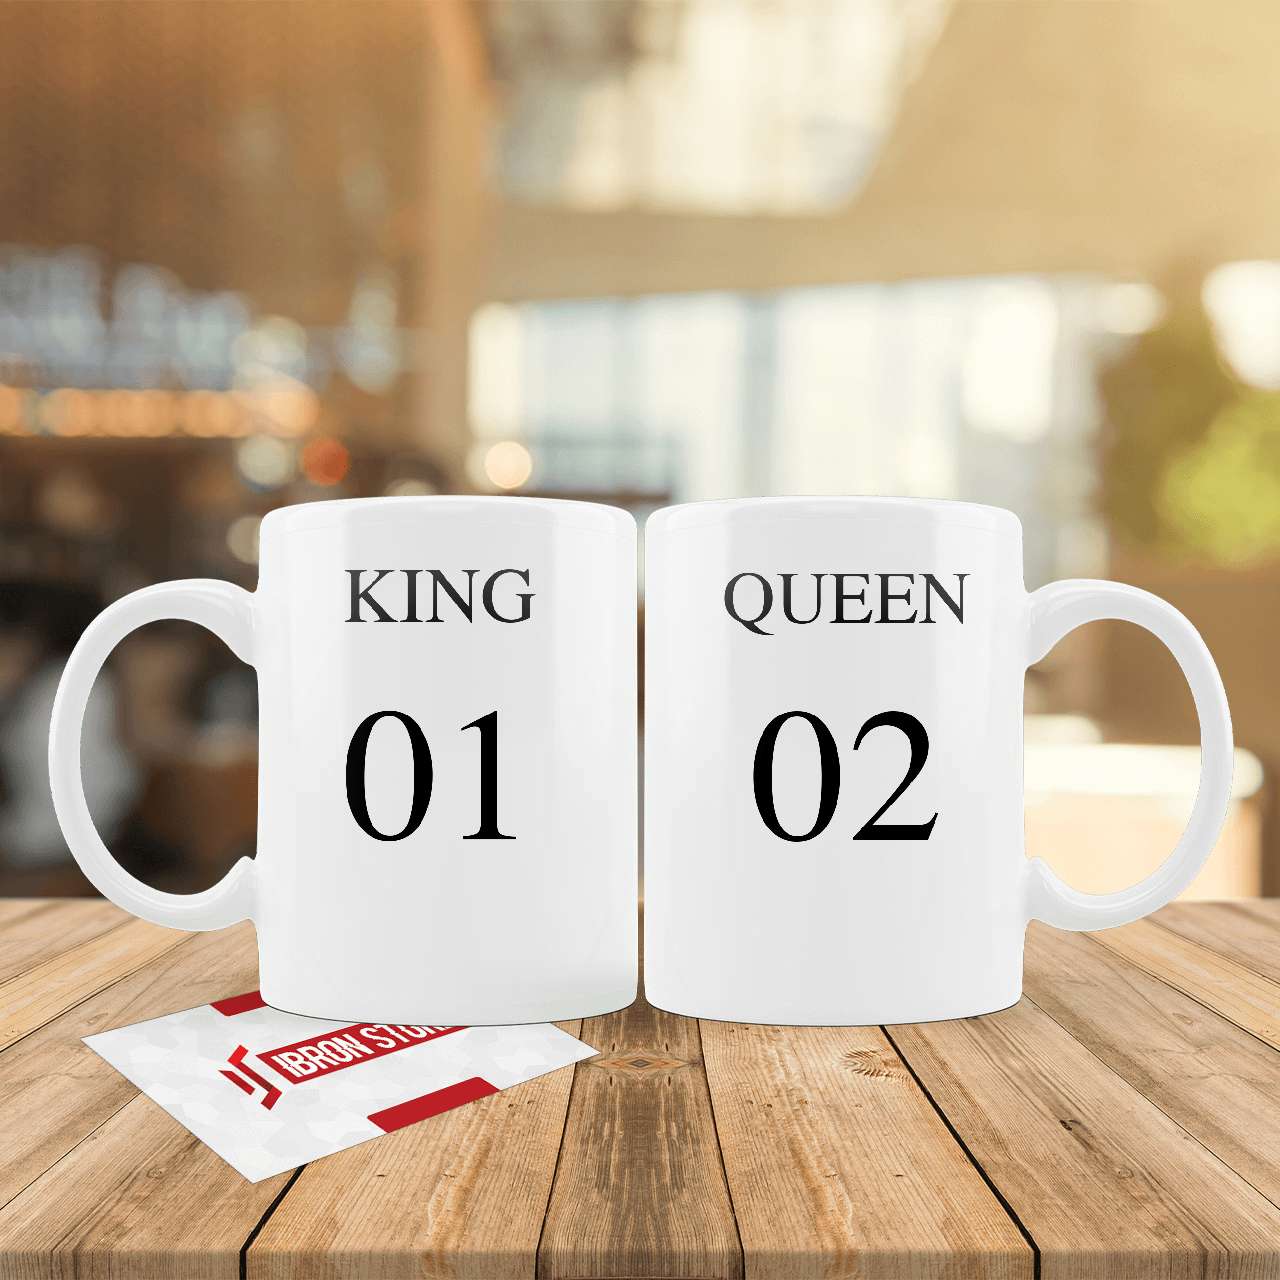 King 01 and Queen 02 mintás páros bögre